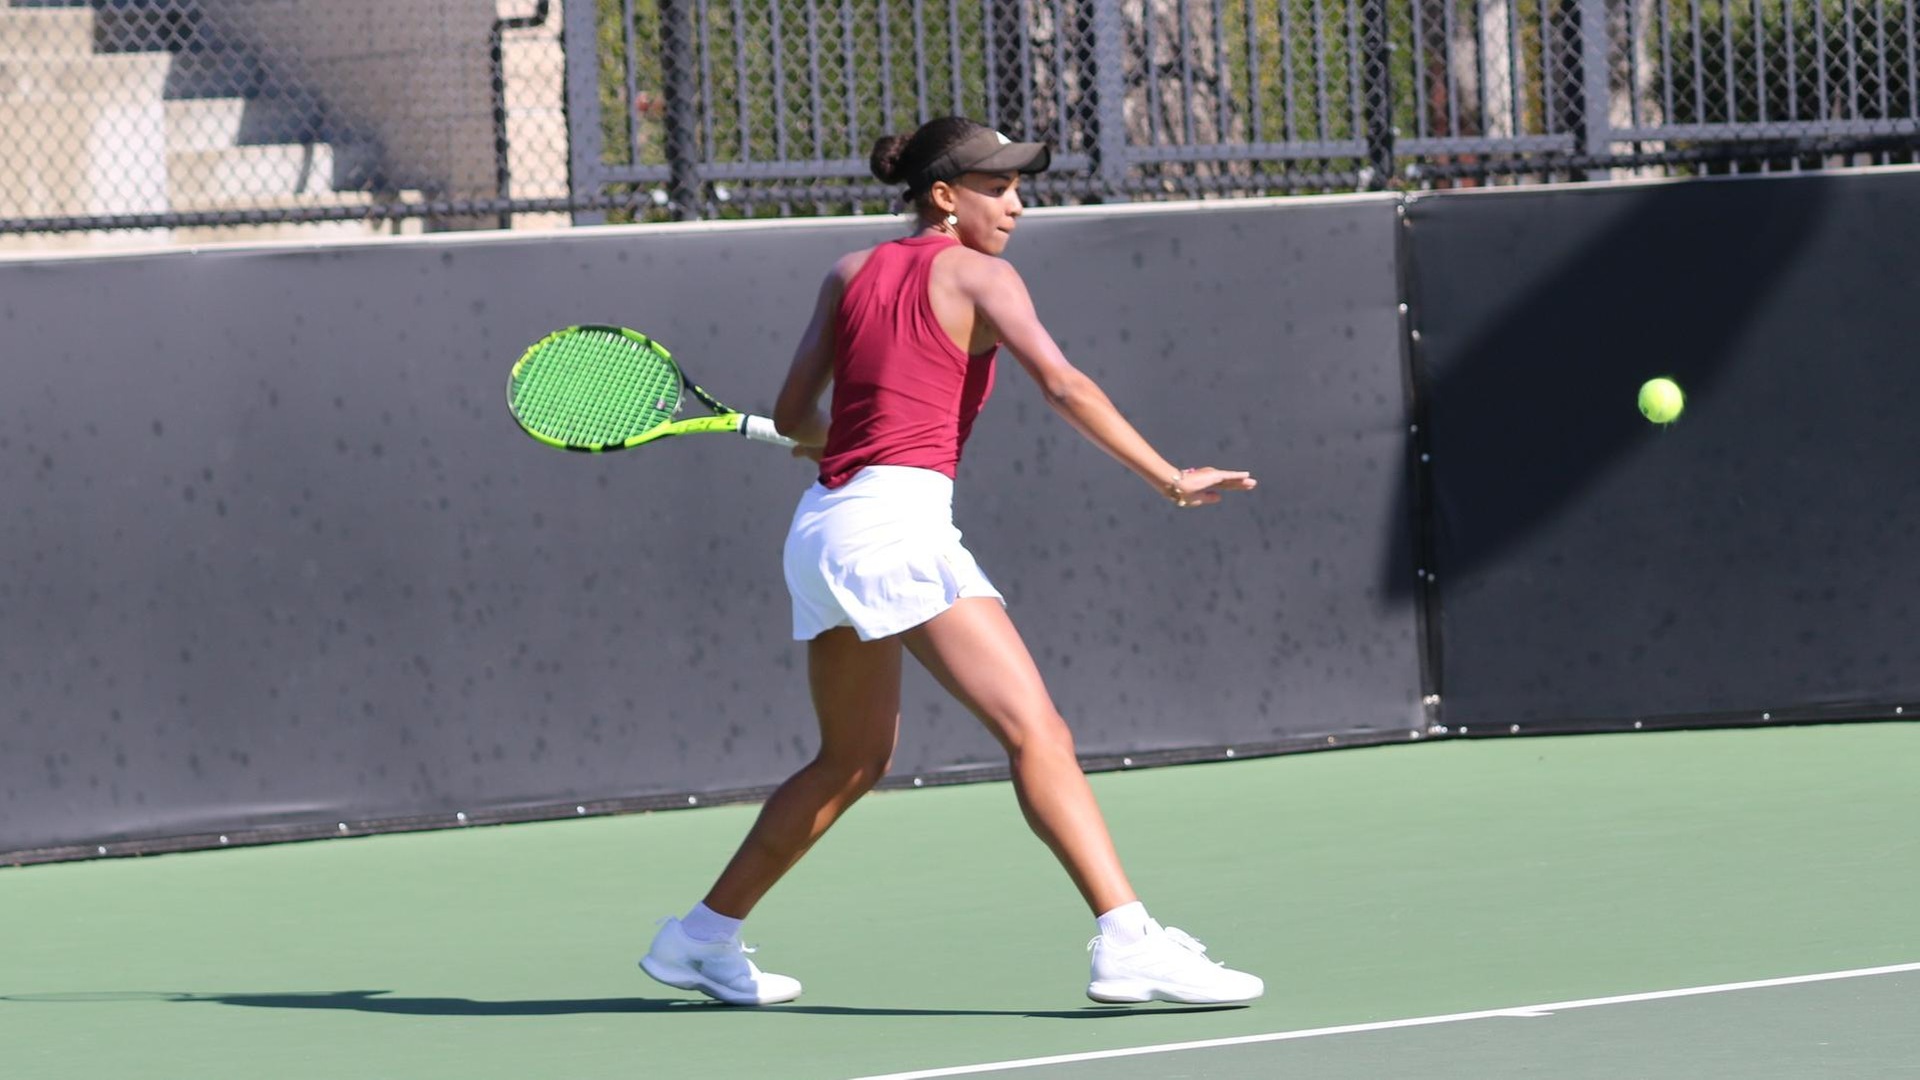 Ella Brissett earned wins in singles and doubles